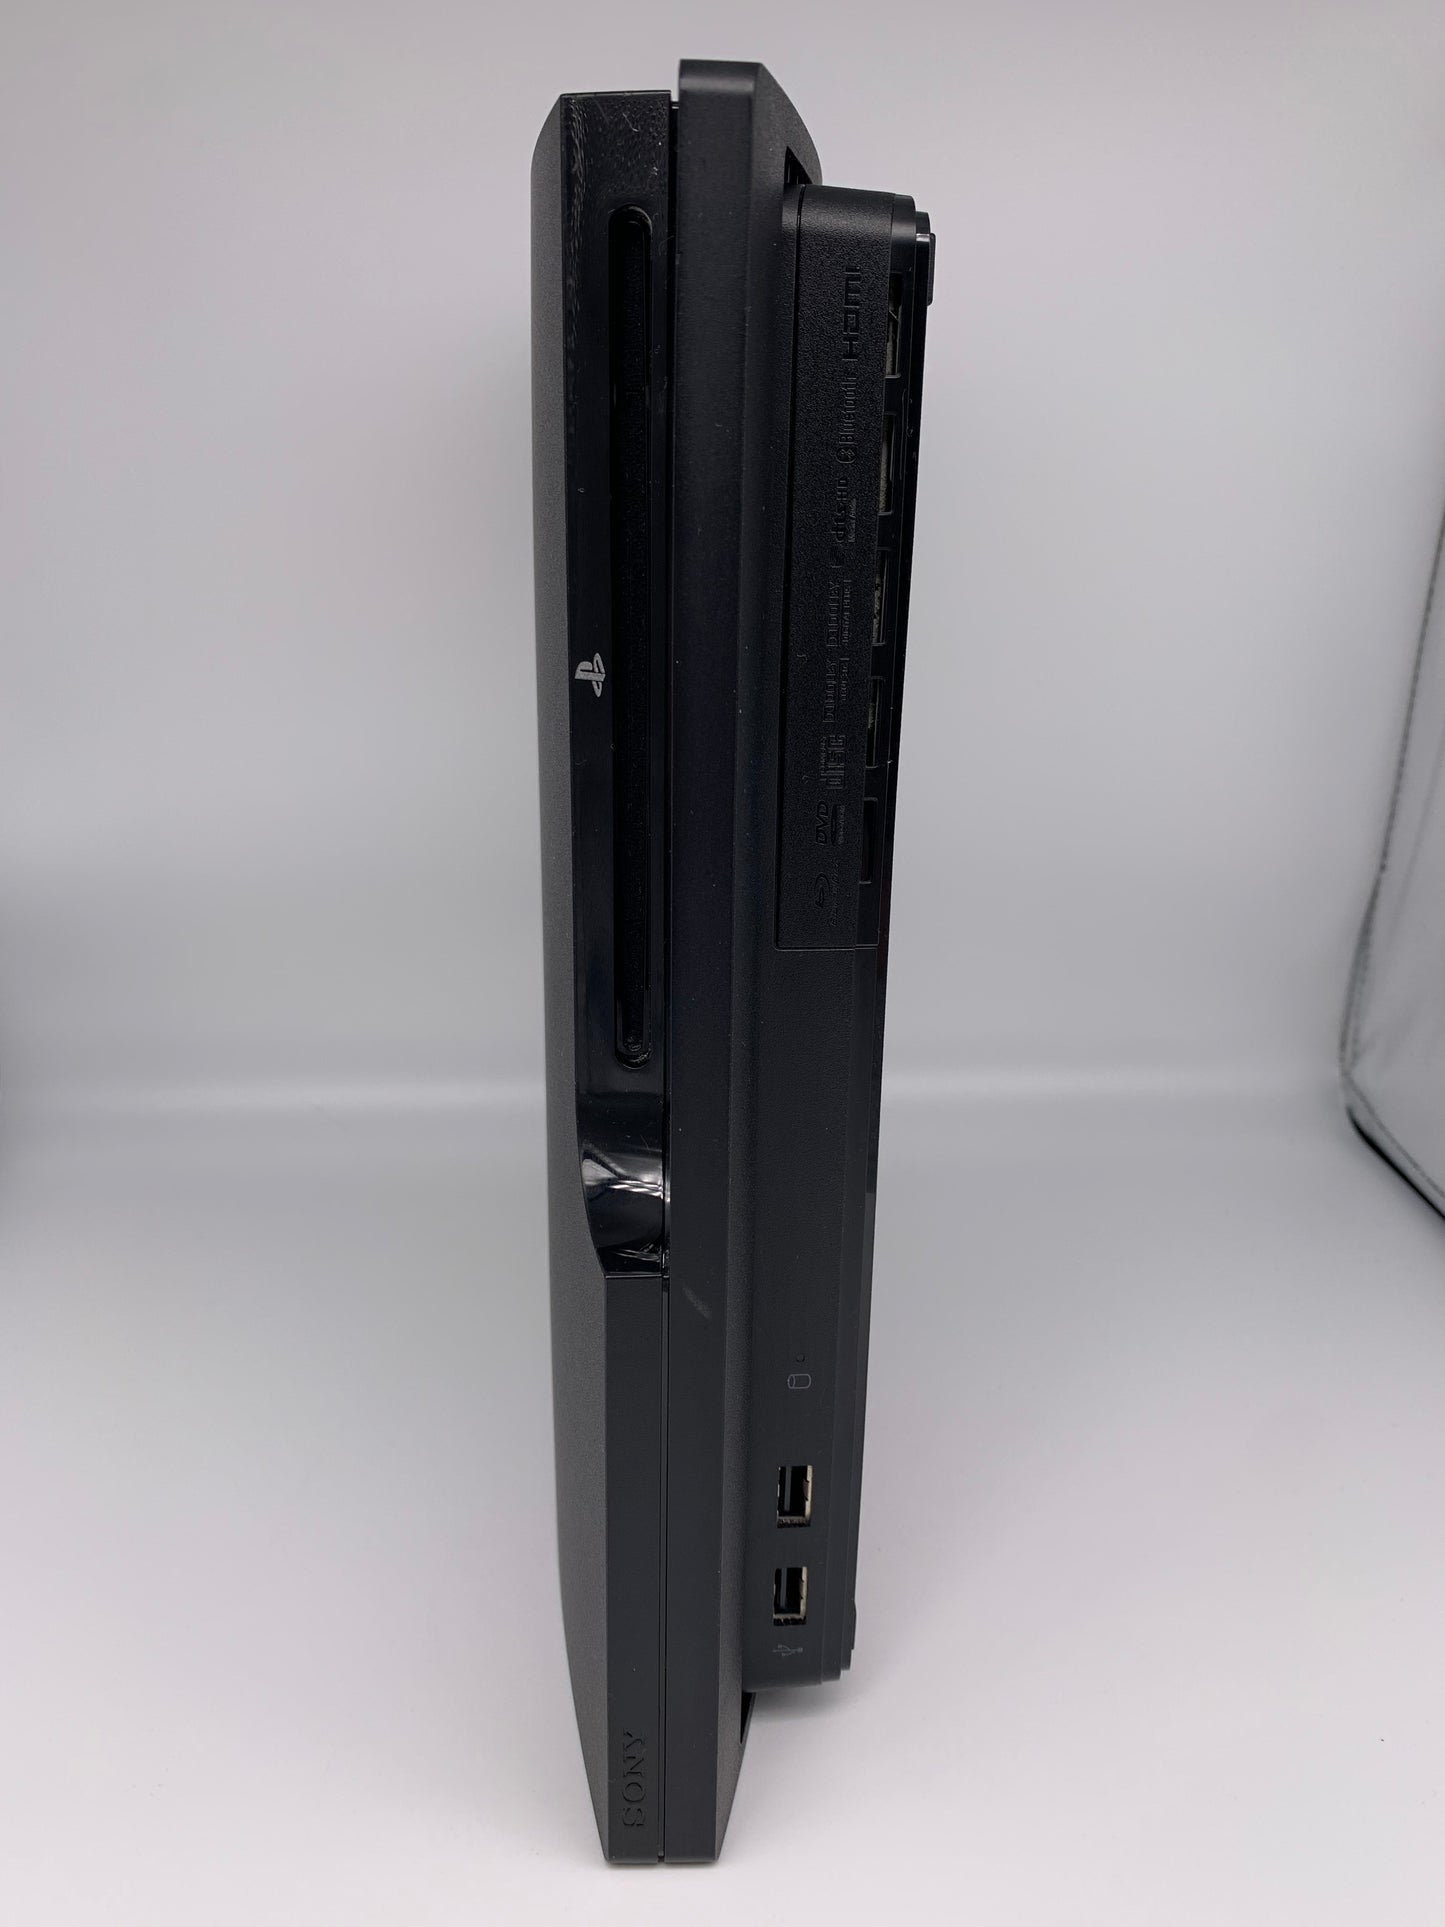 SONY PLAYSTATiON 3 [PS3] CONSOLE | ORiGiNALE NOiRE MiNCE 160GB (SLiM BLACK VERSiON | CECH-3001A